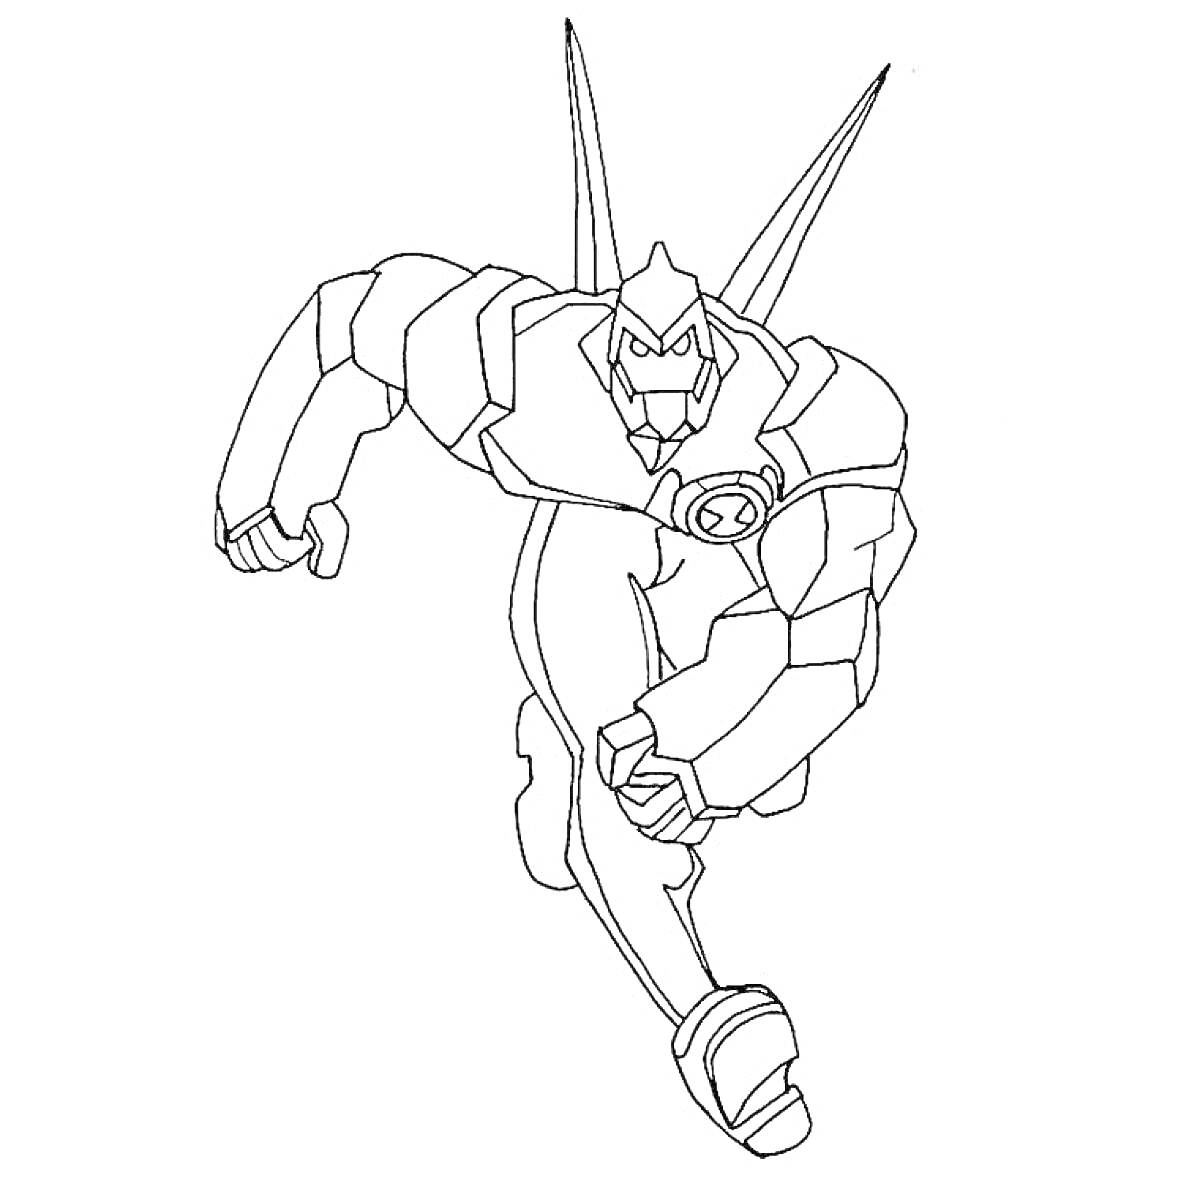 Гуманоидное существо из Бен 10 в прыжке, с шипами на спине и значком Омнитрикса на груди